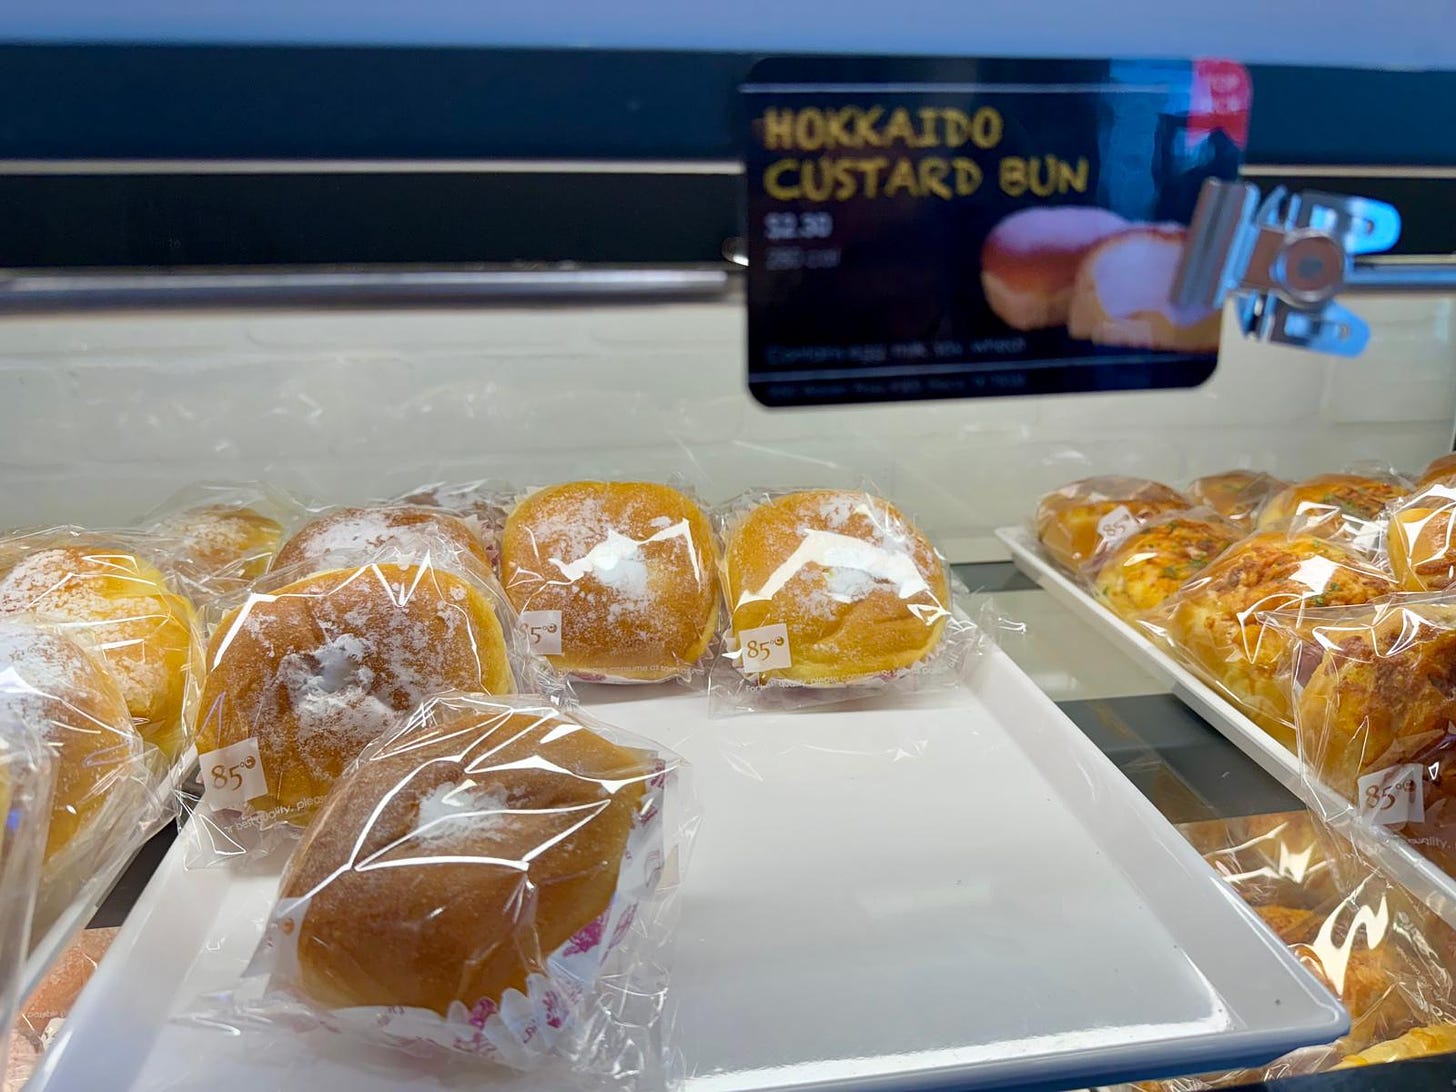 A tray of plastic-wrapped Hokkaido custard buns below a sign that says "Hokkaido custard bun."